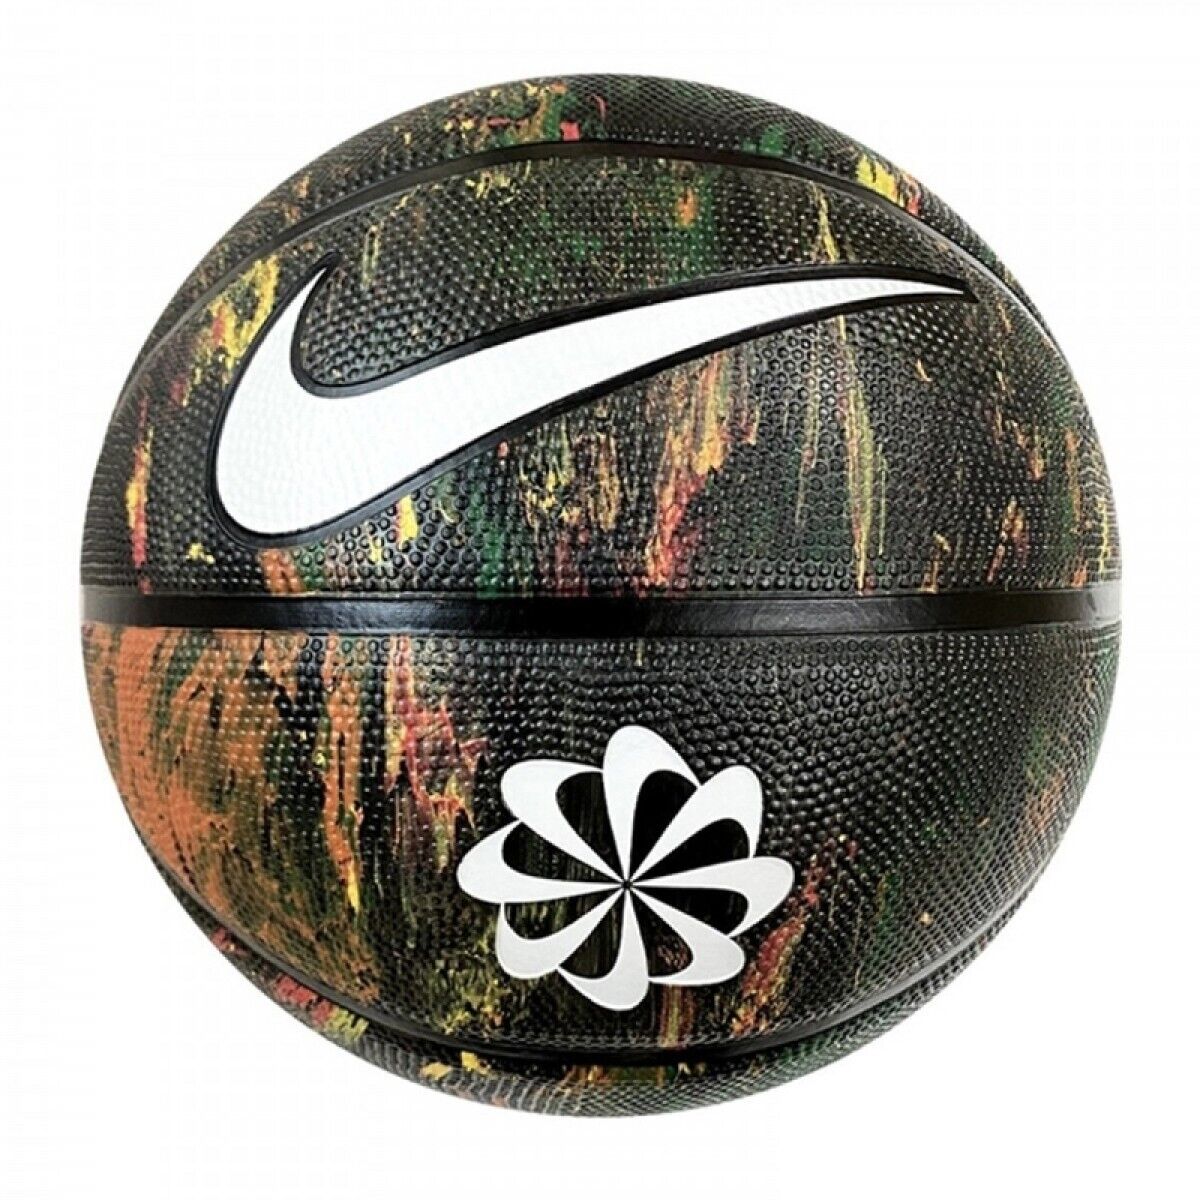 Nike pallone da pallacanestro Everyday Playground Sunburst nero misura 7